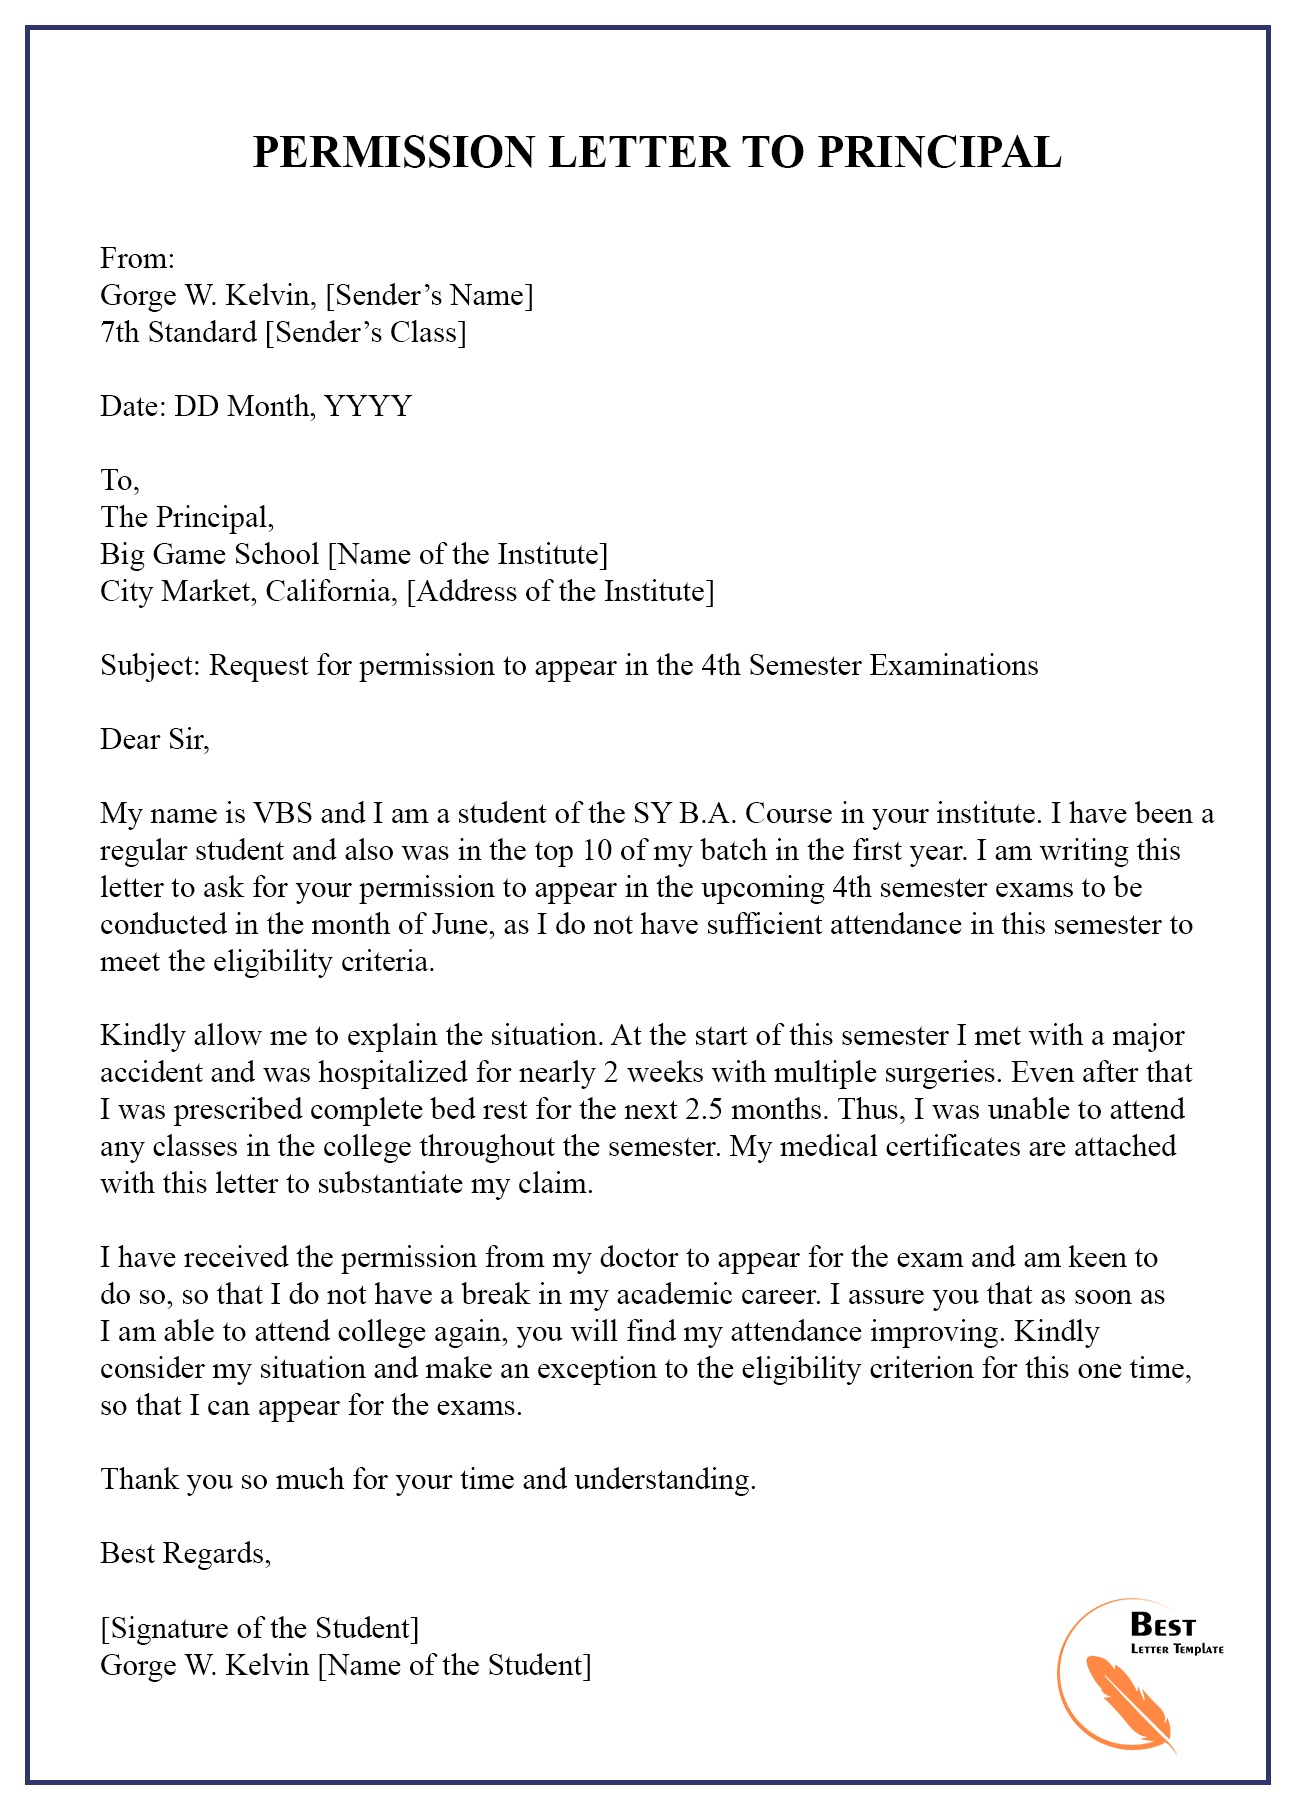 Permission Letter Template